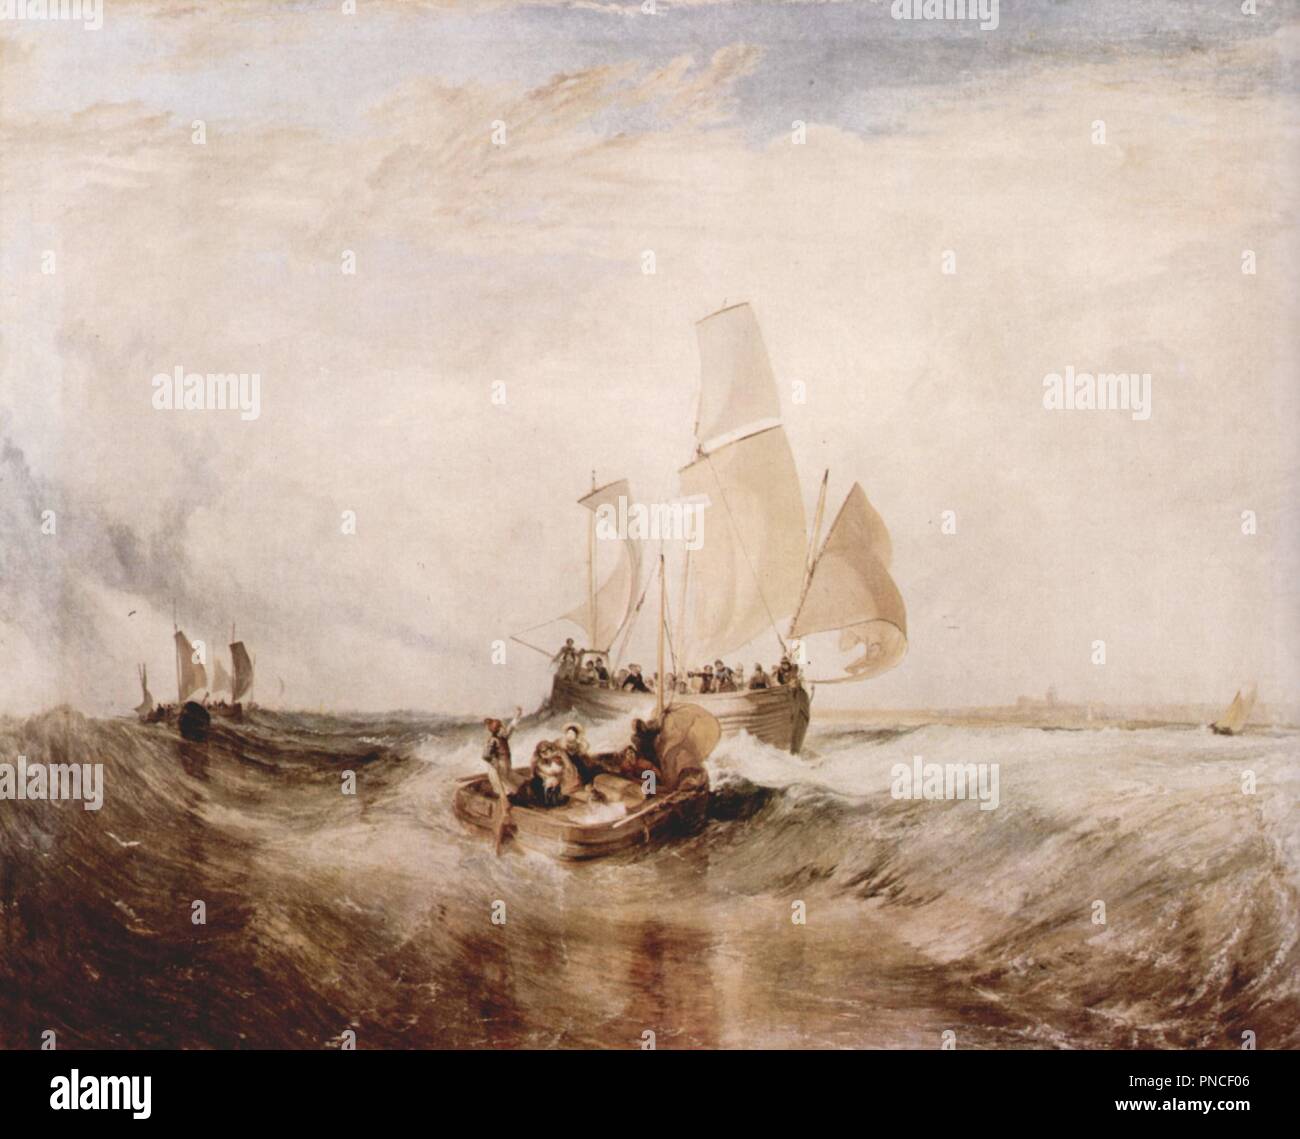 Jetzt für den Maler, Passagiere gehen an Bord. Date/Period: 1827. Painting. Oil on canvas. 170.2 × 235.5 cm (67 × 92.7 in). Author: J. M. W. Turner. Stock Photo